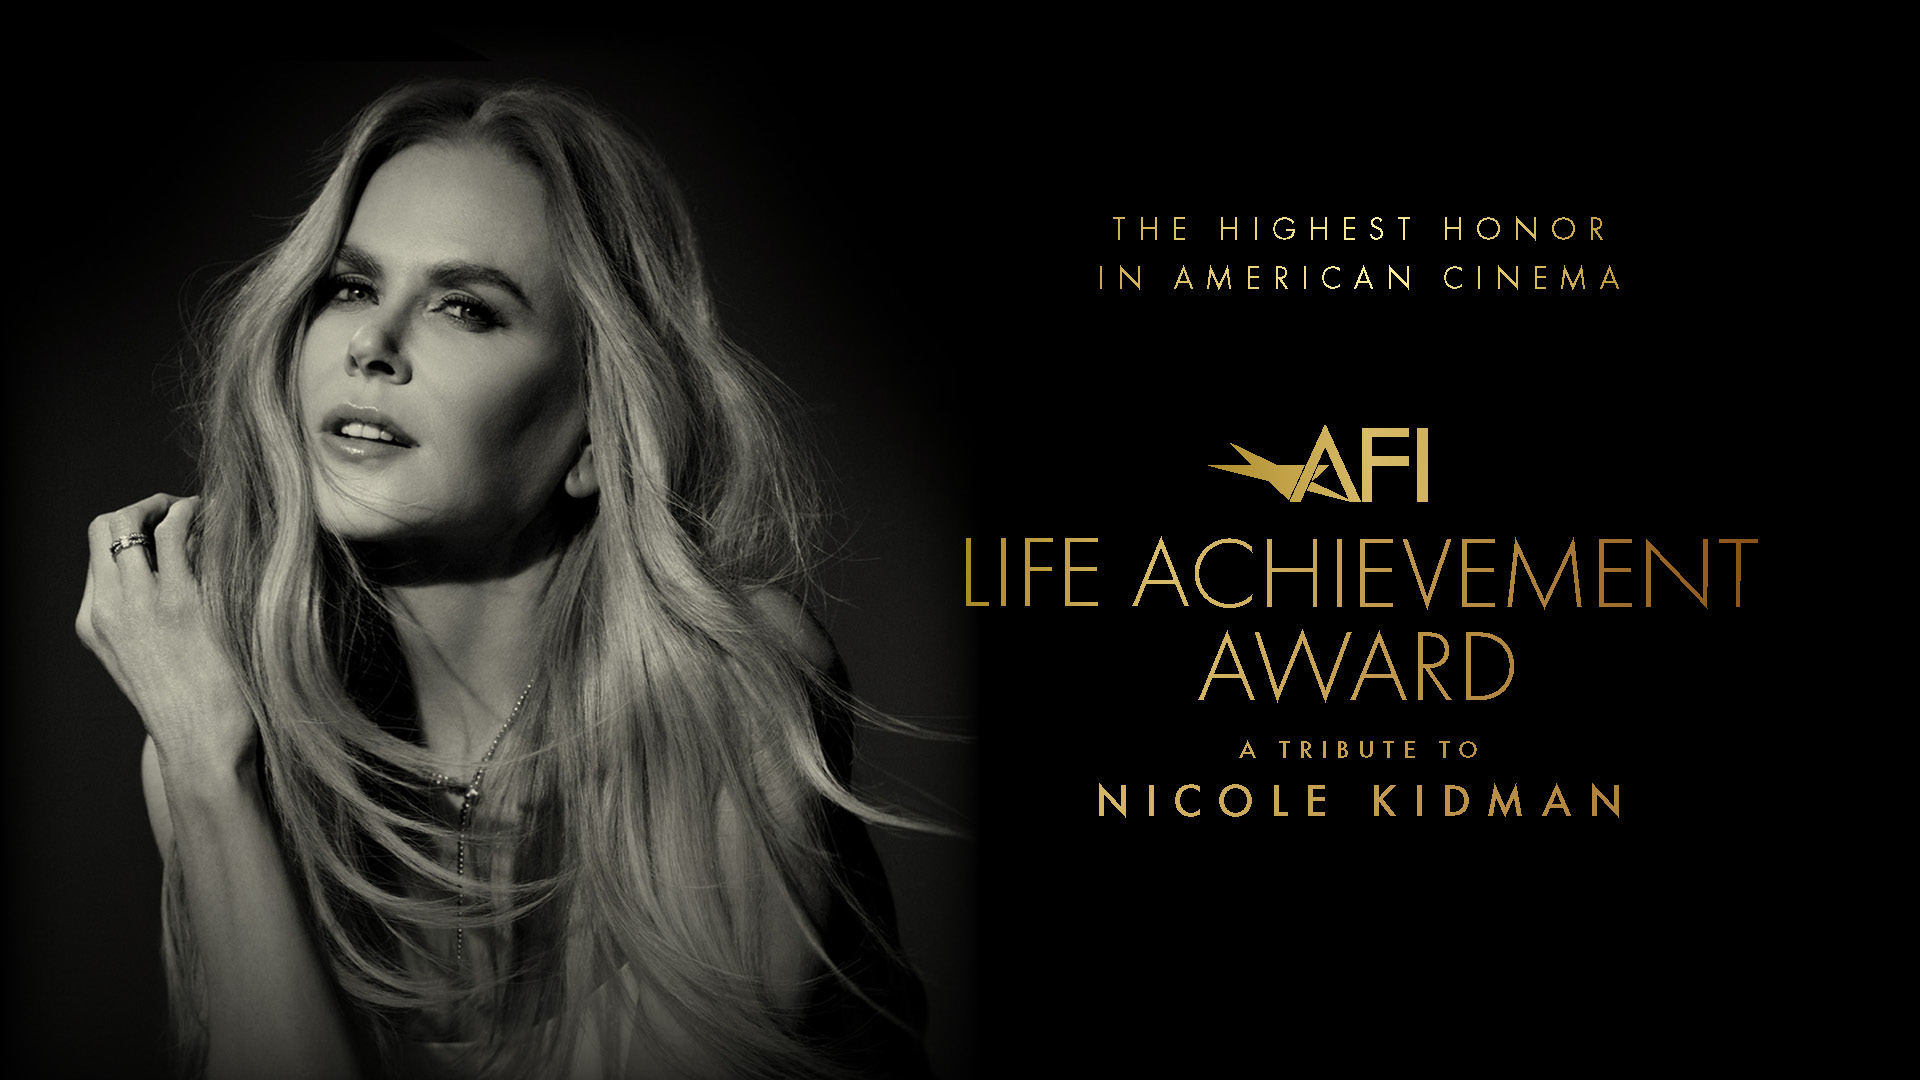 Nicole Kidman - AFI Life Achievement Award blog post header - image of Nicole Kidman with the text "The highest honor in American cinema. AFI Life Achievement Award - A Tribute to Nicole Kidman"